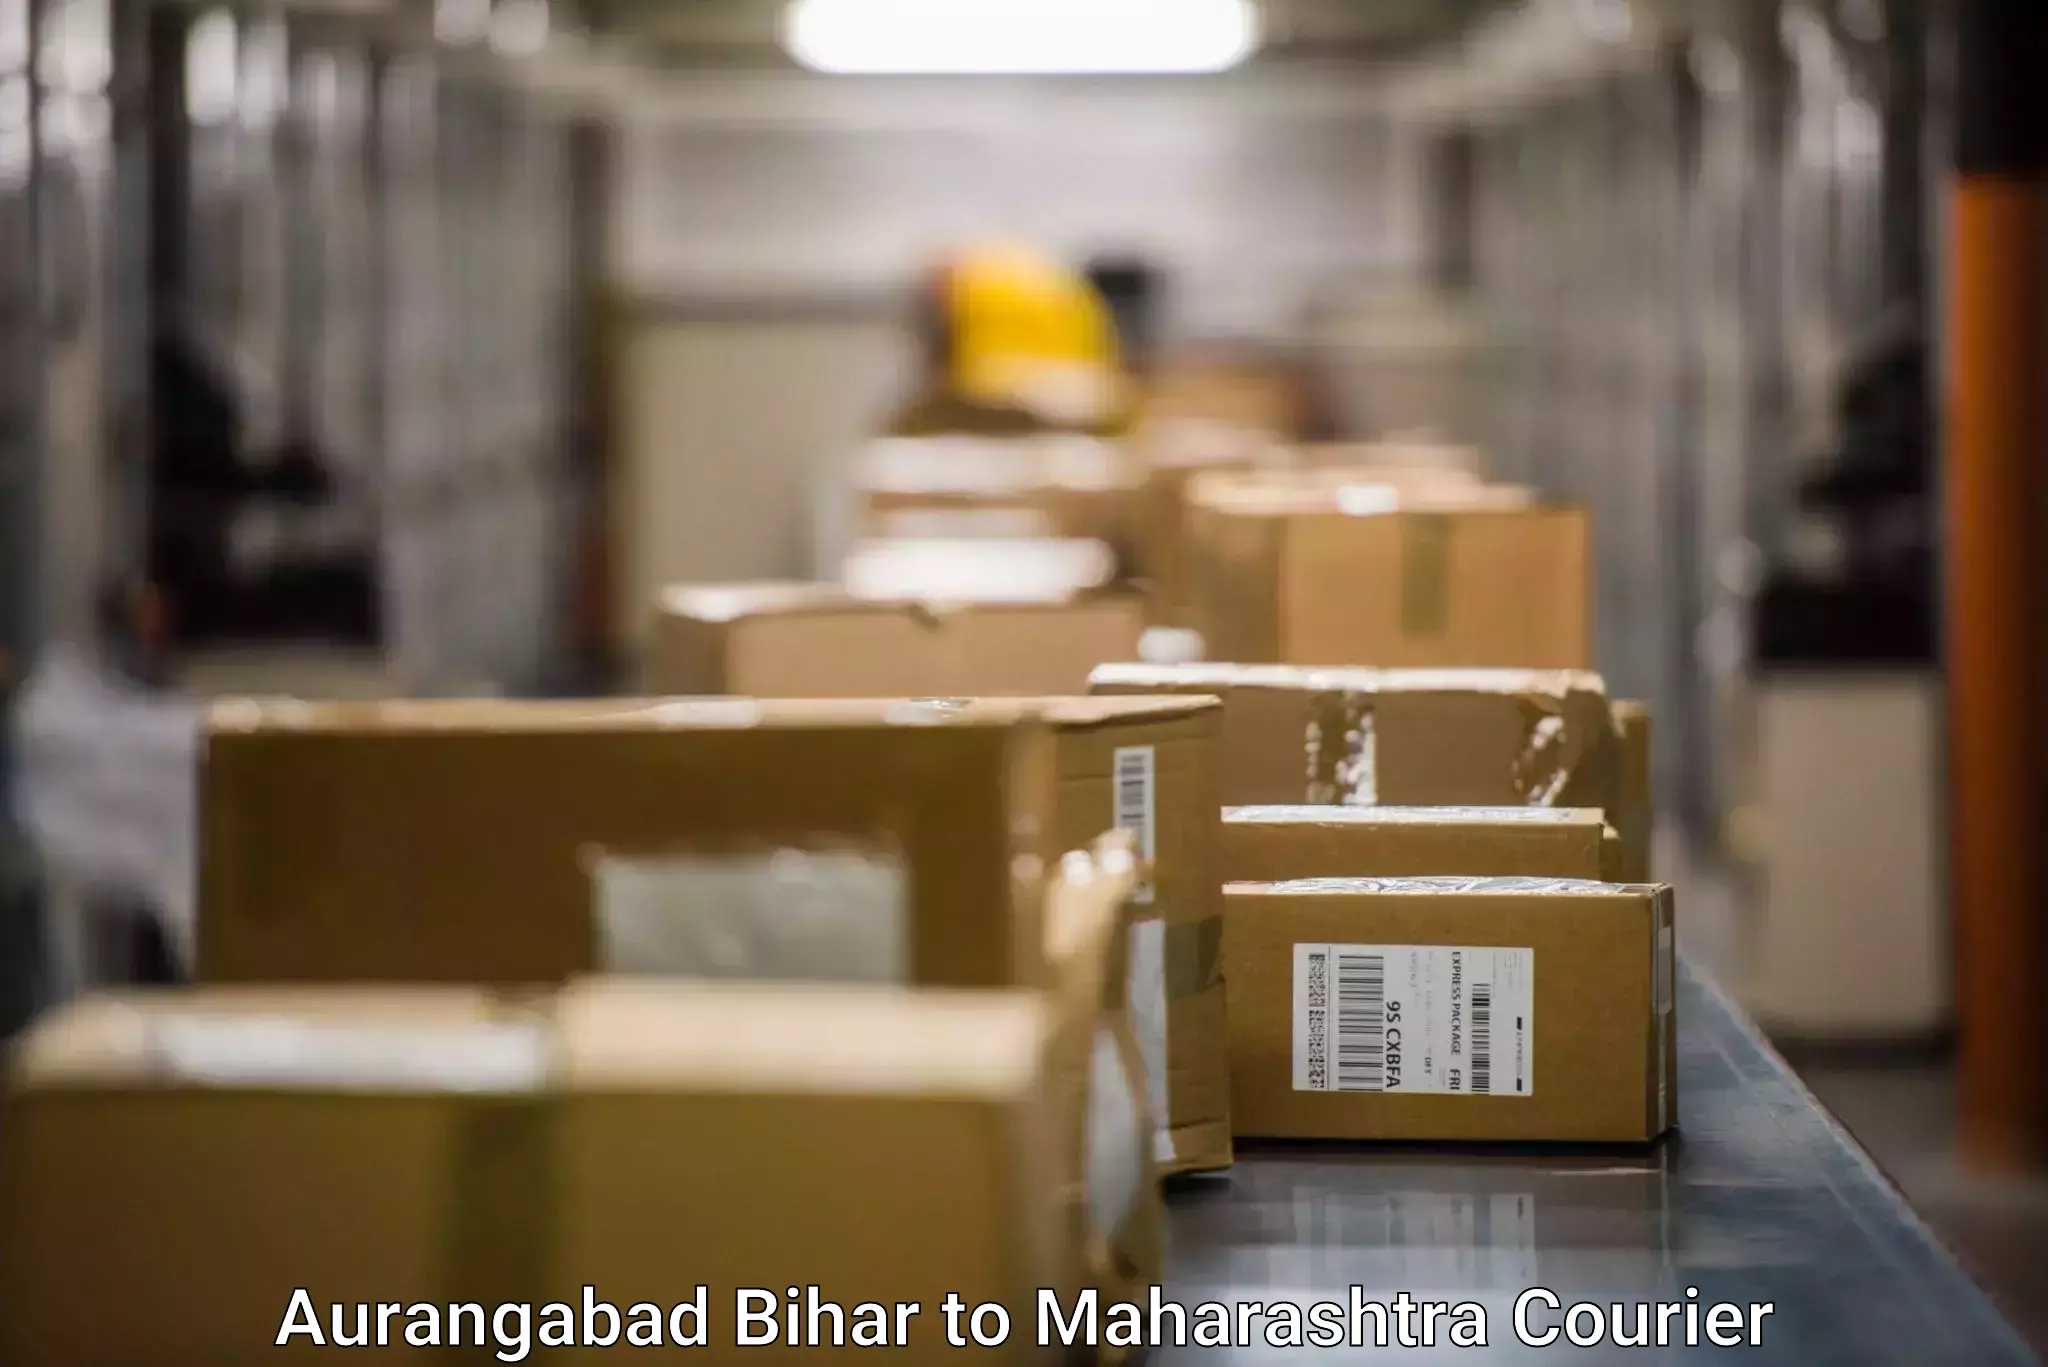 Express delivery network Aurangabad Bihar to Raver